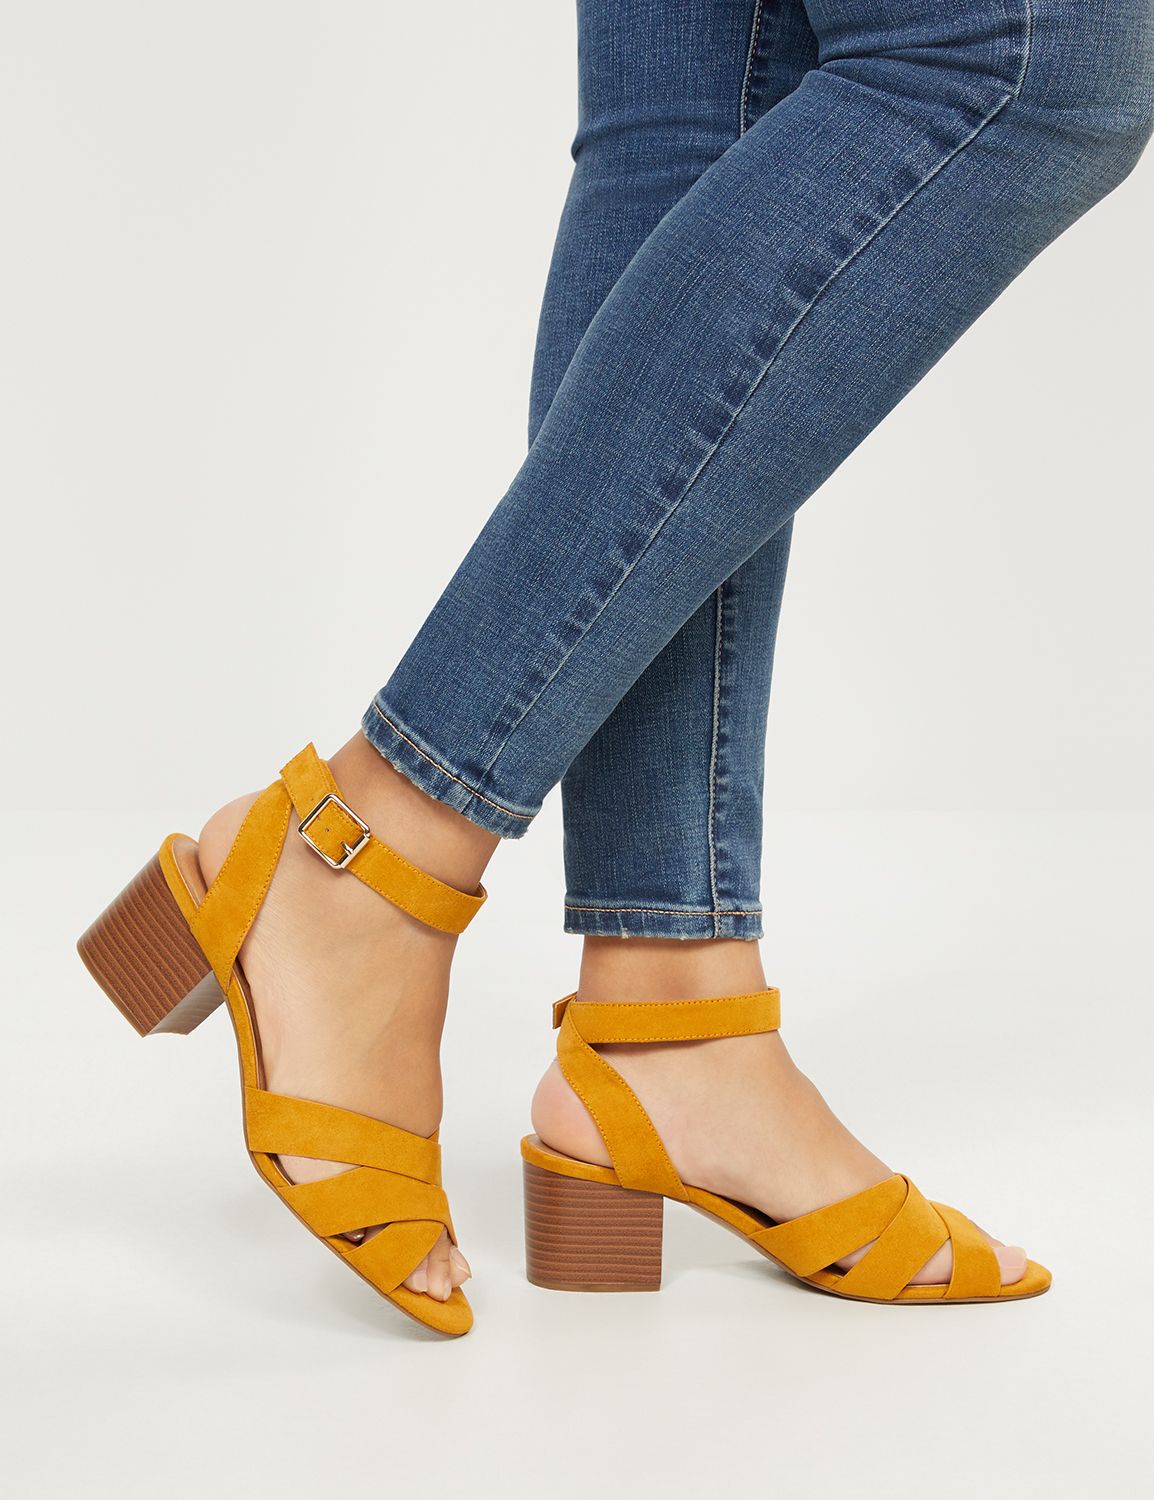 yellow wide width sandals